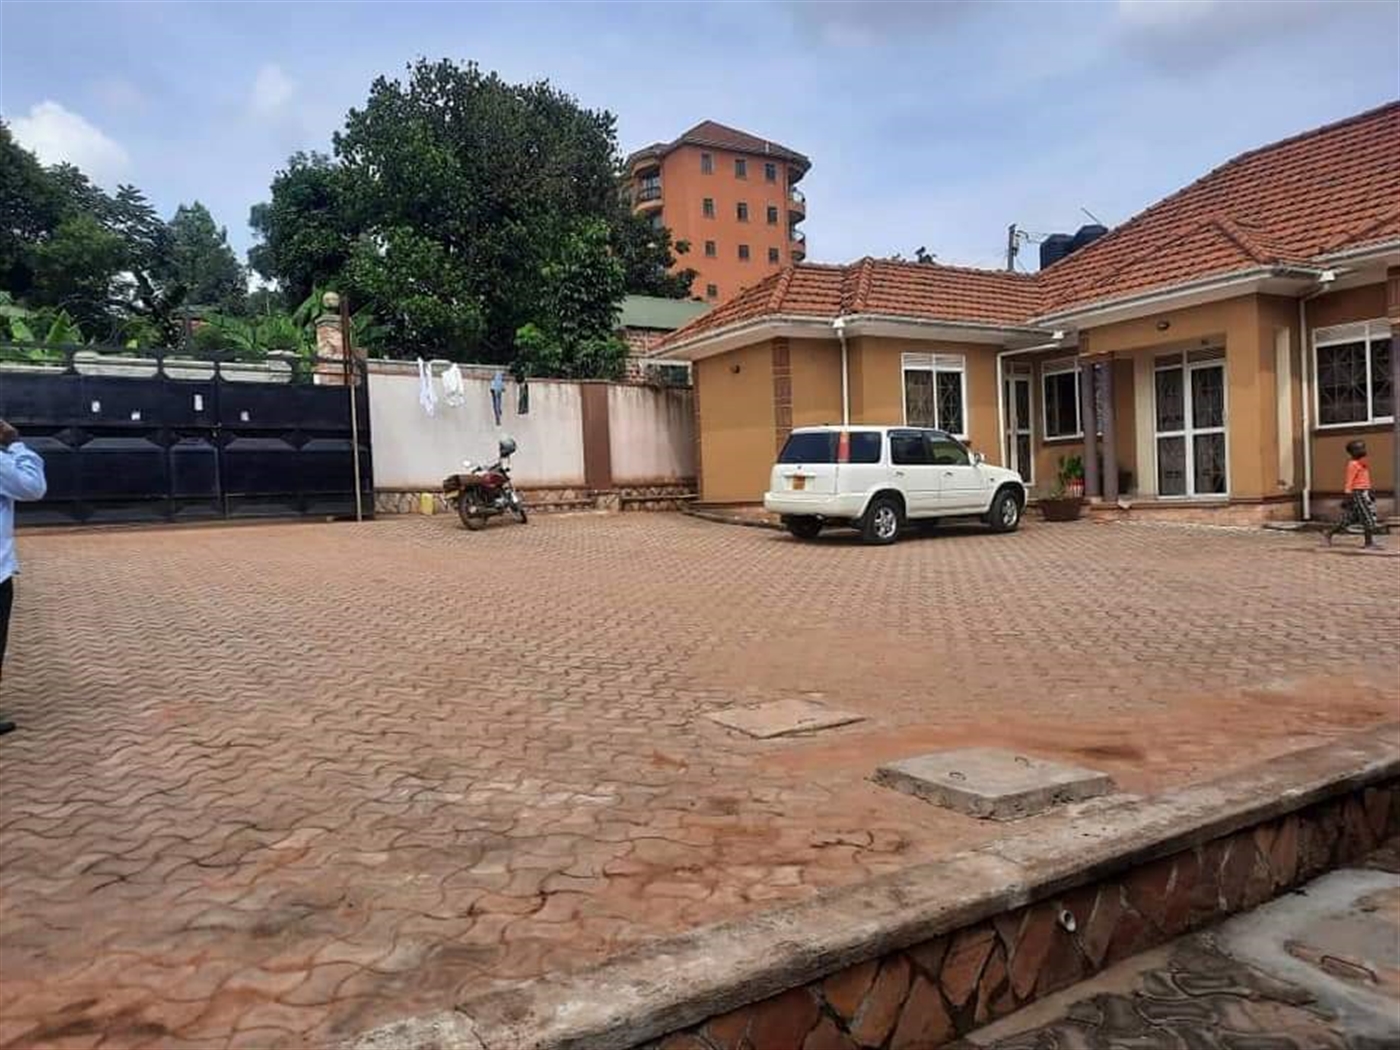 Rental units for sale in Rubaga Kampala